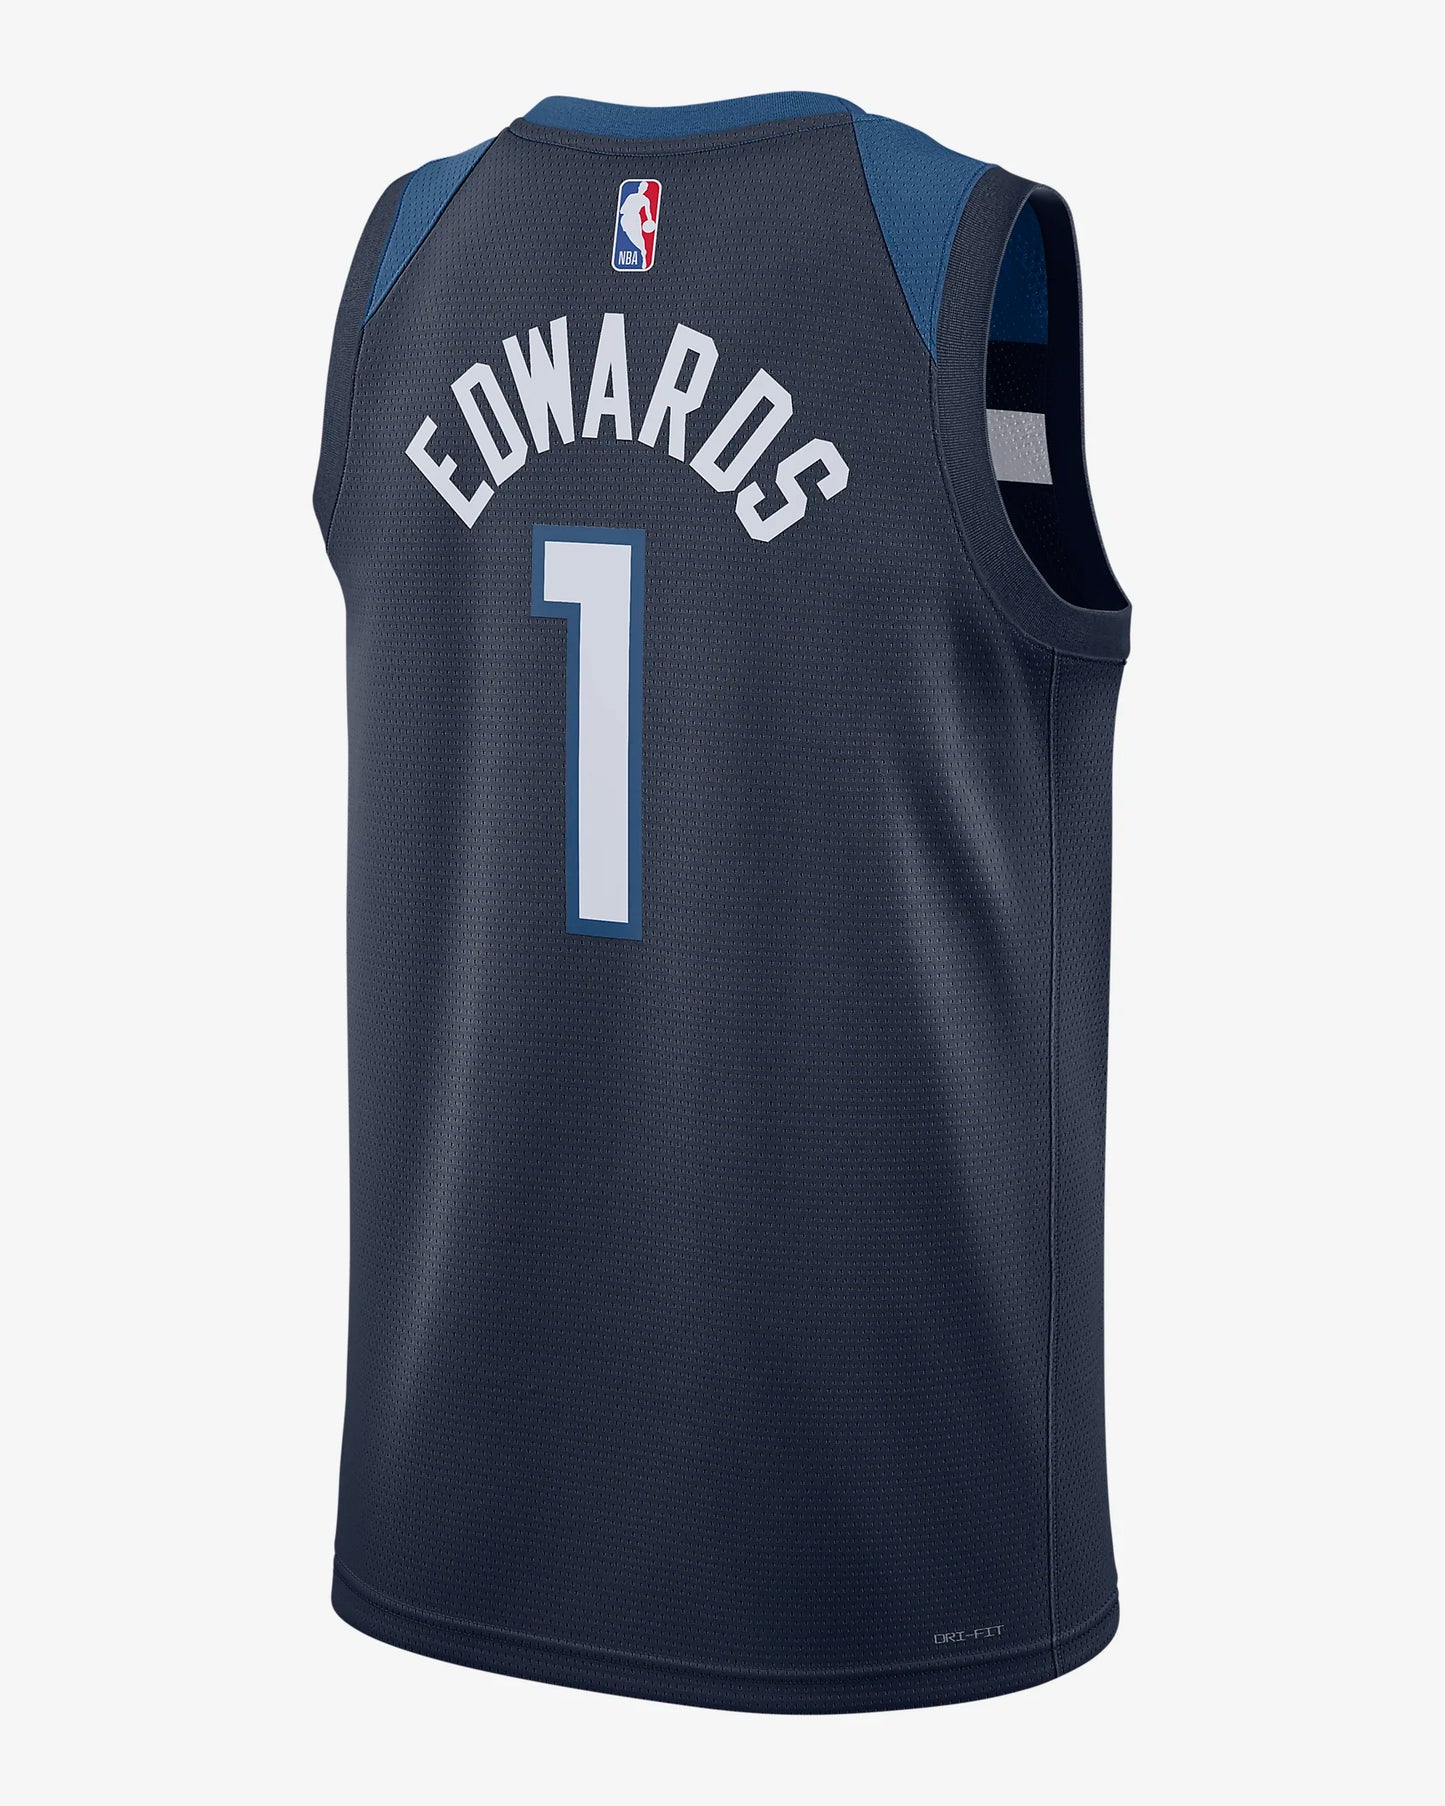 Minnesota Timberwolves Icon Edition 2022/23 Nike Dri-FIT NBA Swingman Jersey